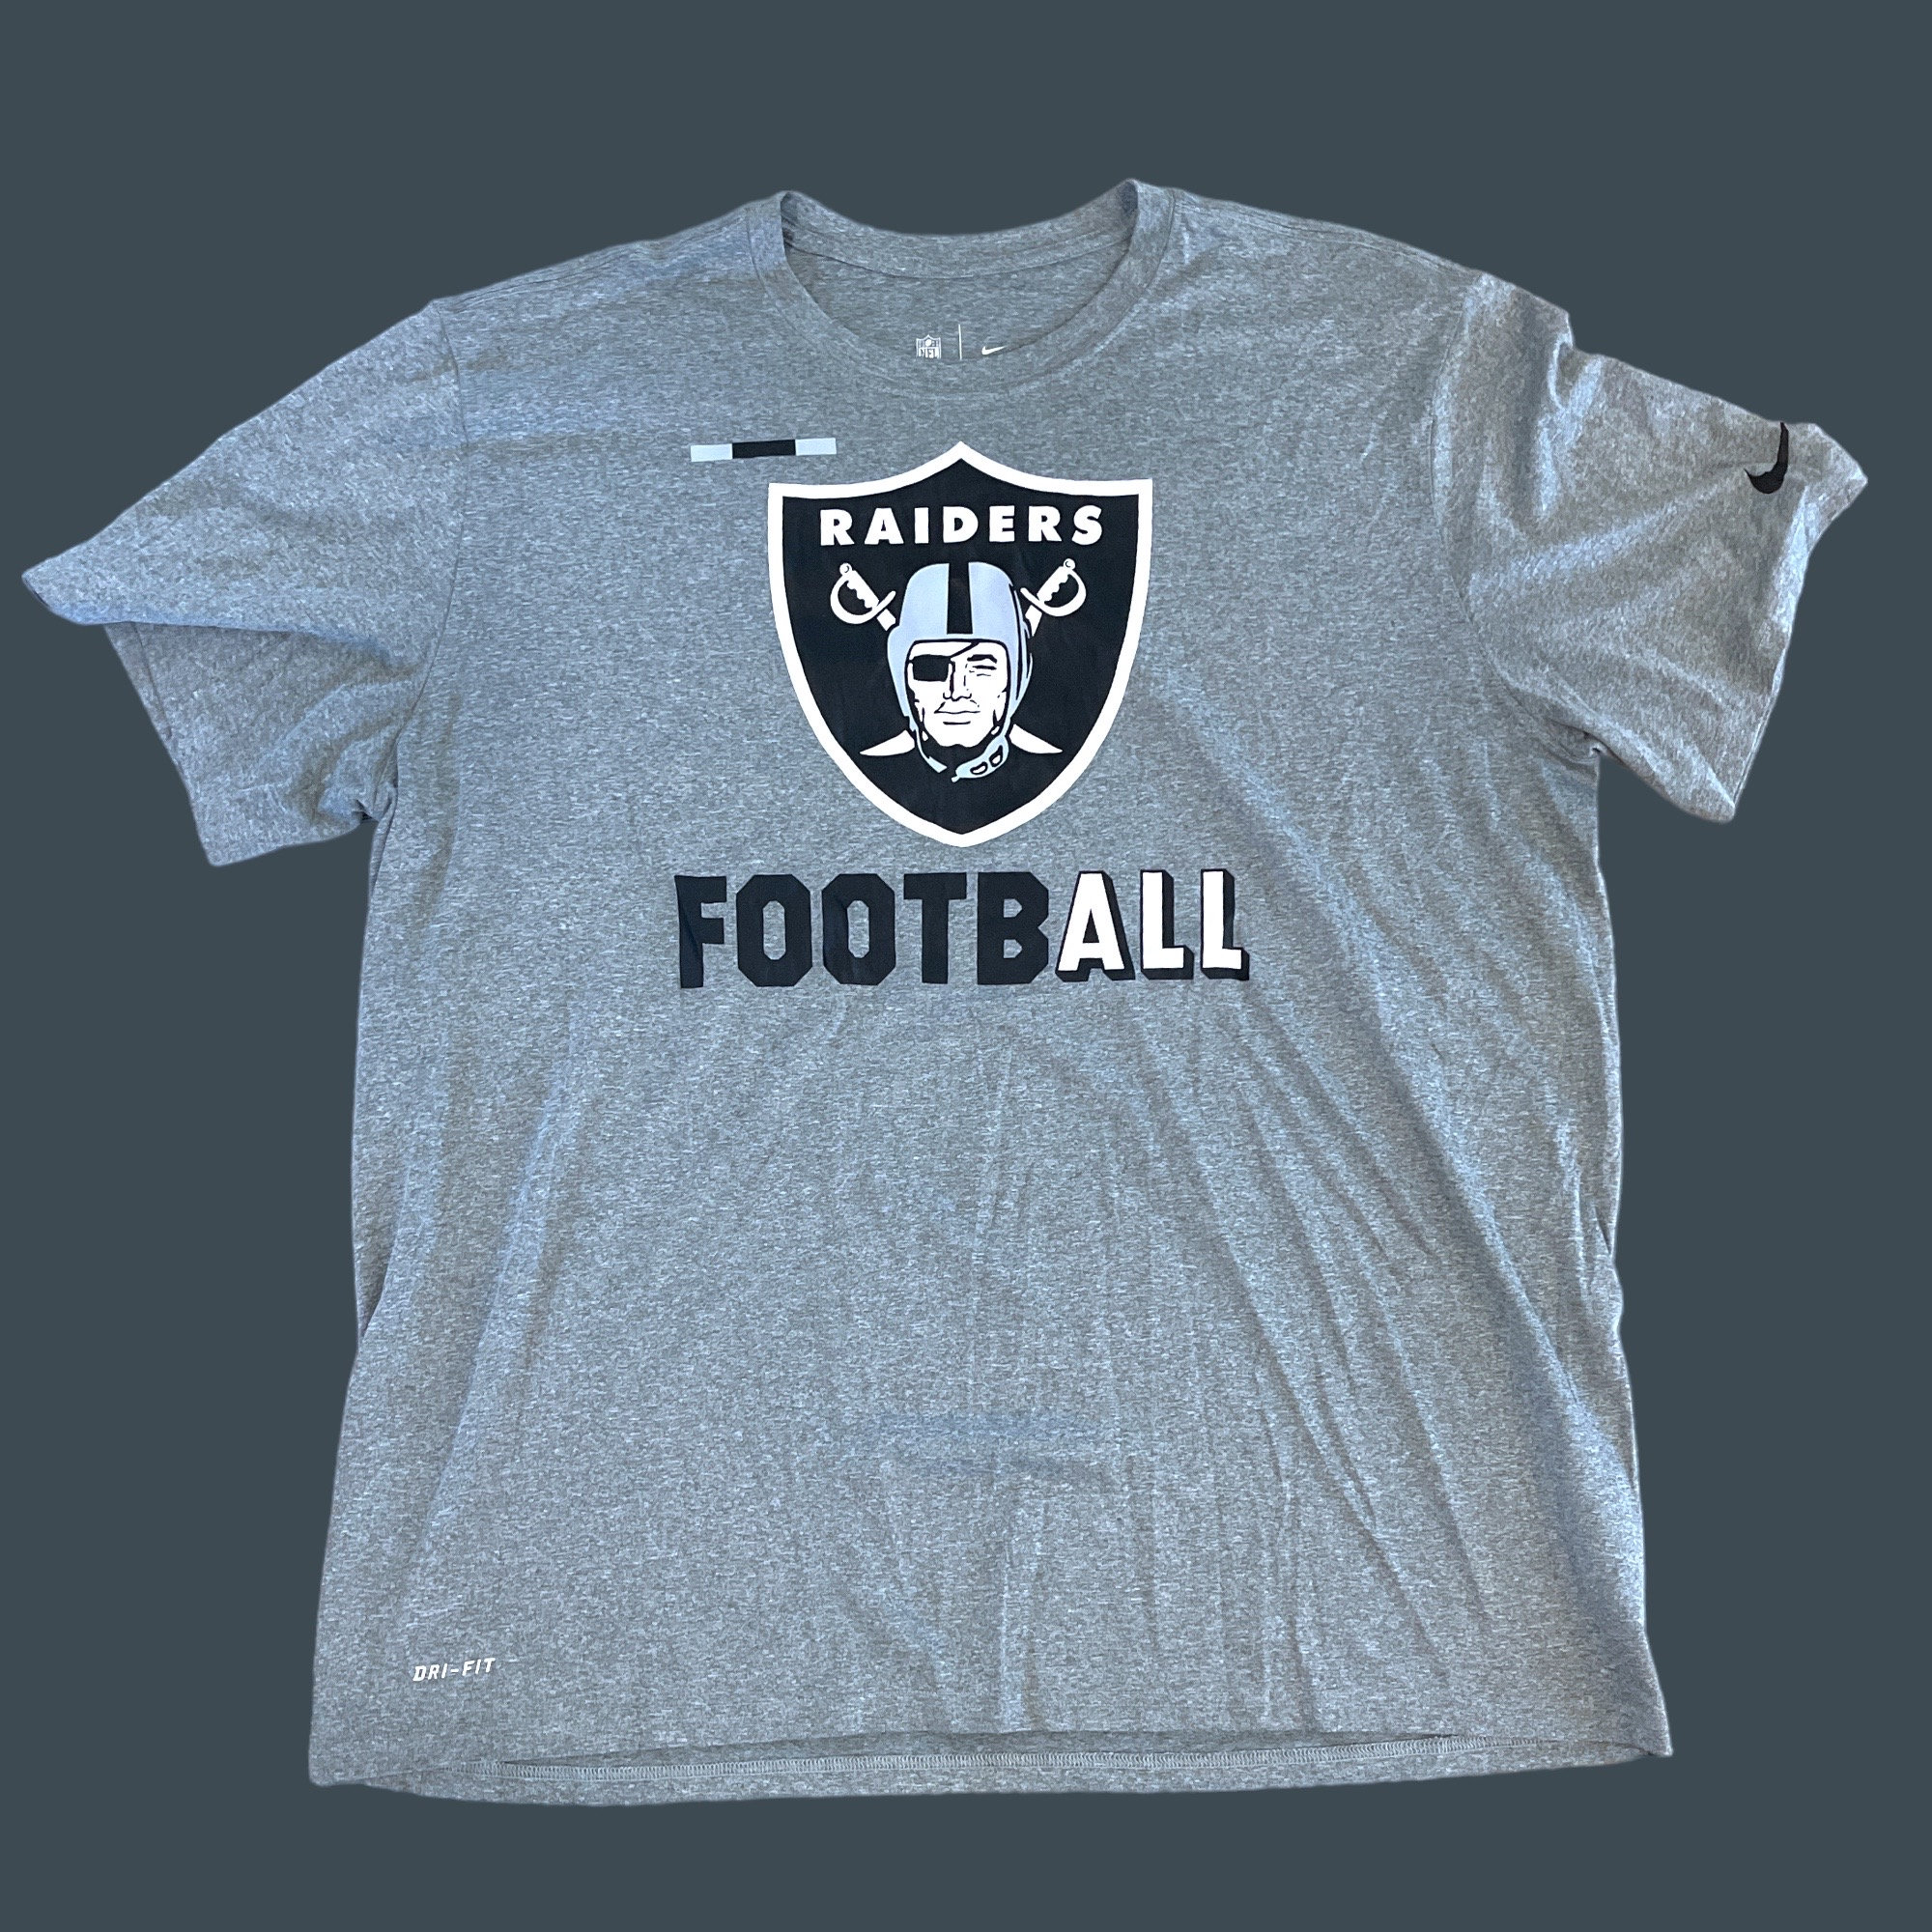 Nike Dri-FIT Exceed (NFL Las Vegas Raiders) Women's T-Shirt.